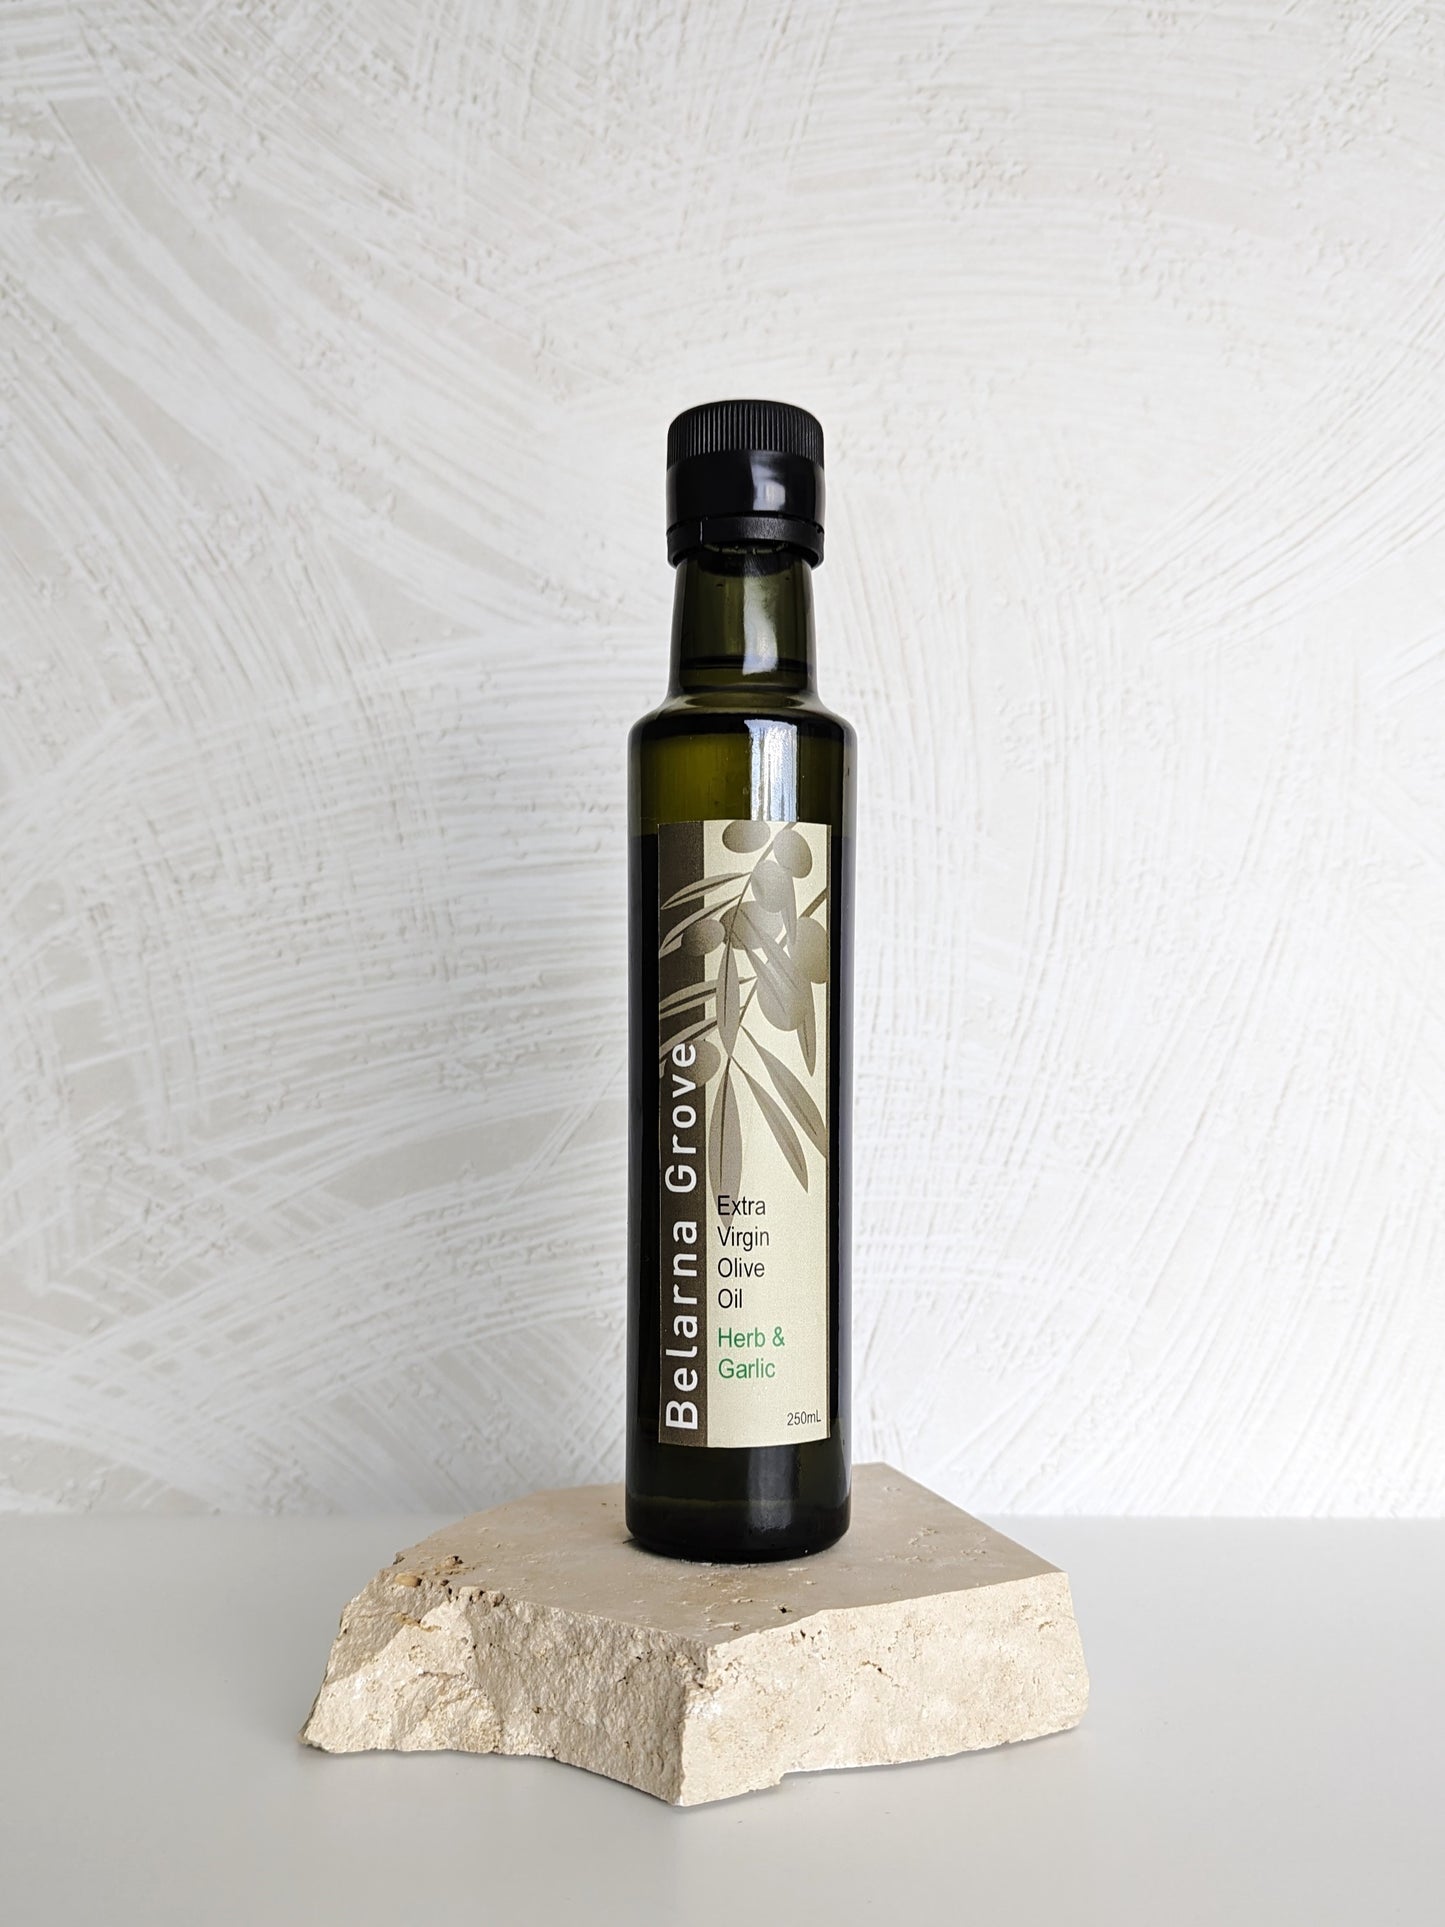 250ml Belarna Grove Olive Oils & Vinegars